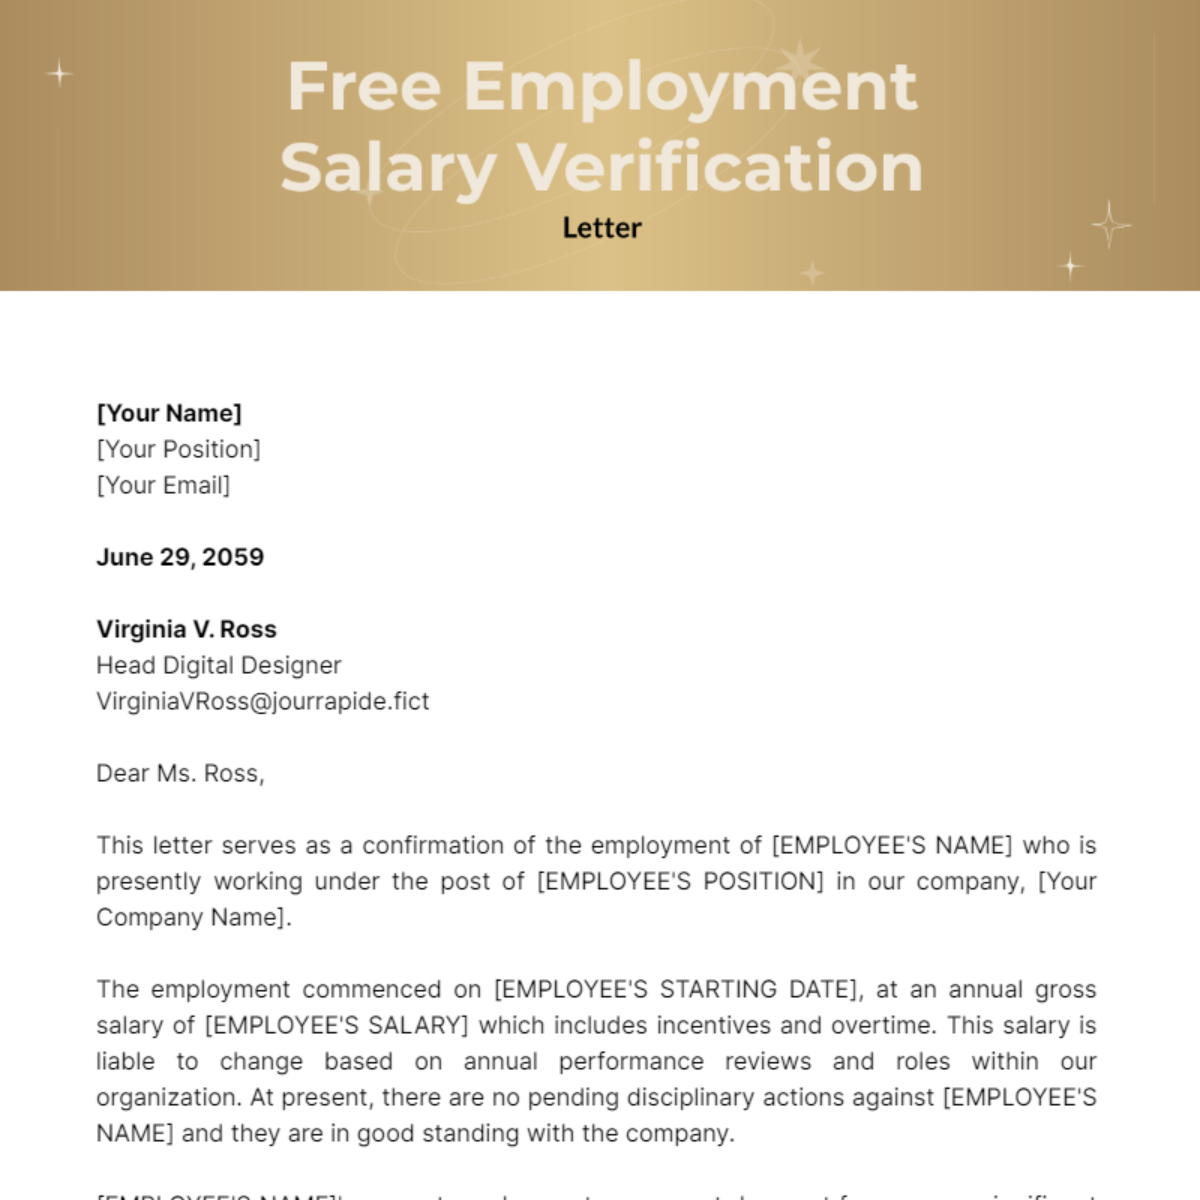 Employment Salary Verification Letter Template